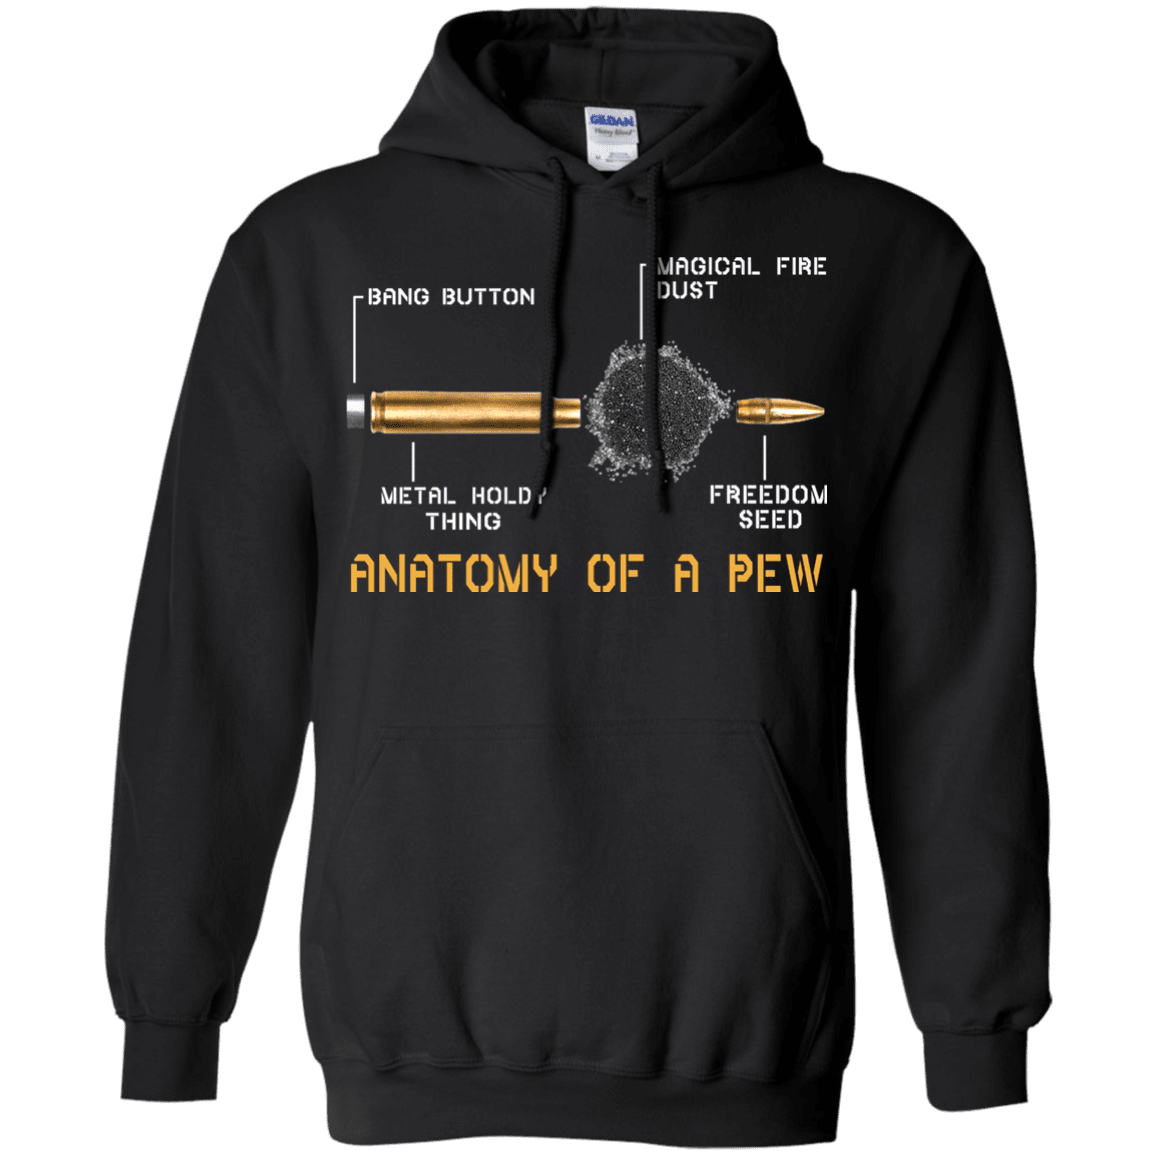 Military T-Shirt "ANATOMY OF A PEW"-TShirt-General-Veterans Nation